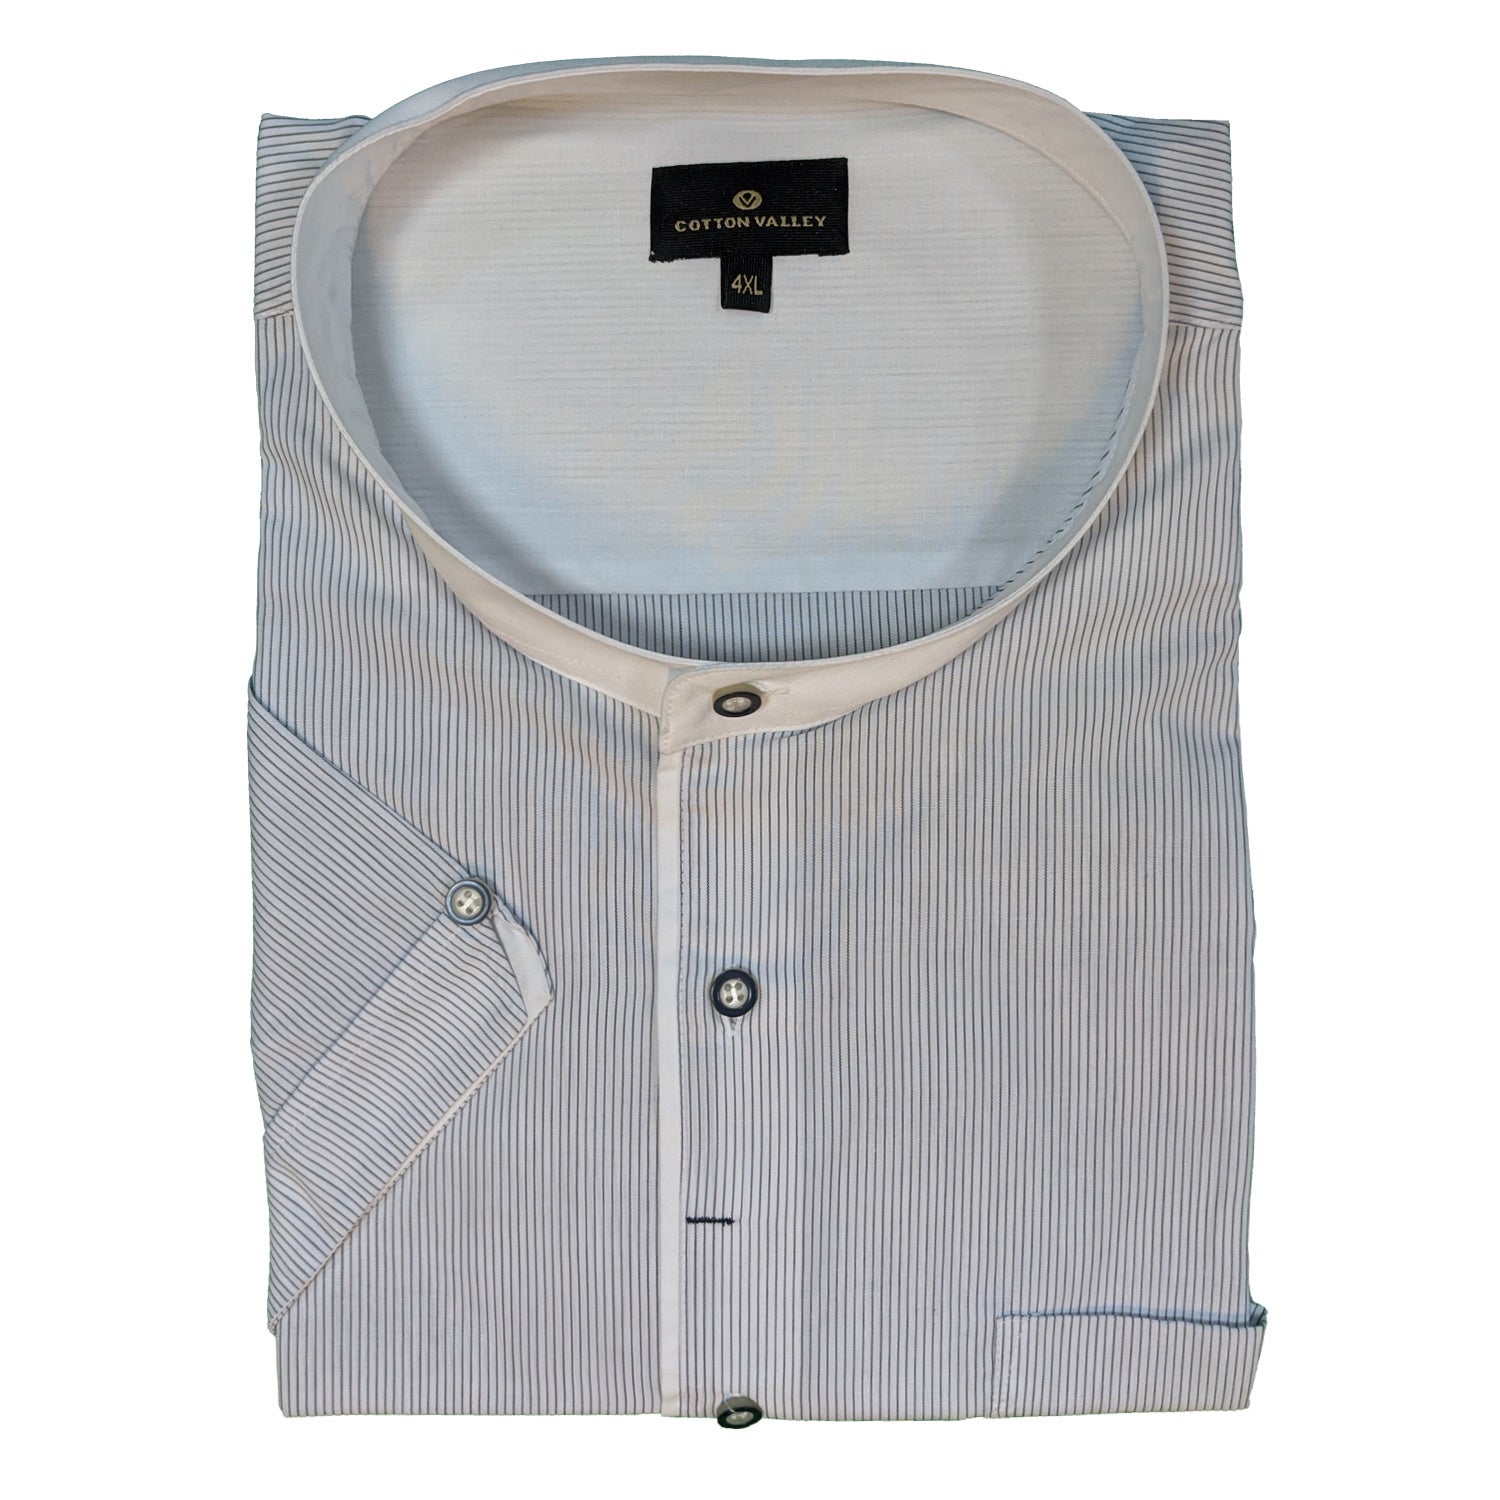 Cotton Valley Grandad Collar S/S Shirt - 14185 - White / Black 1